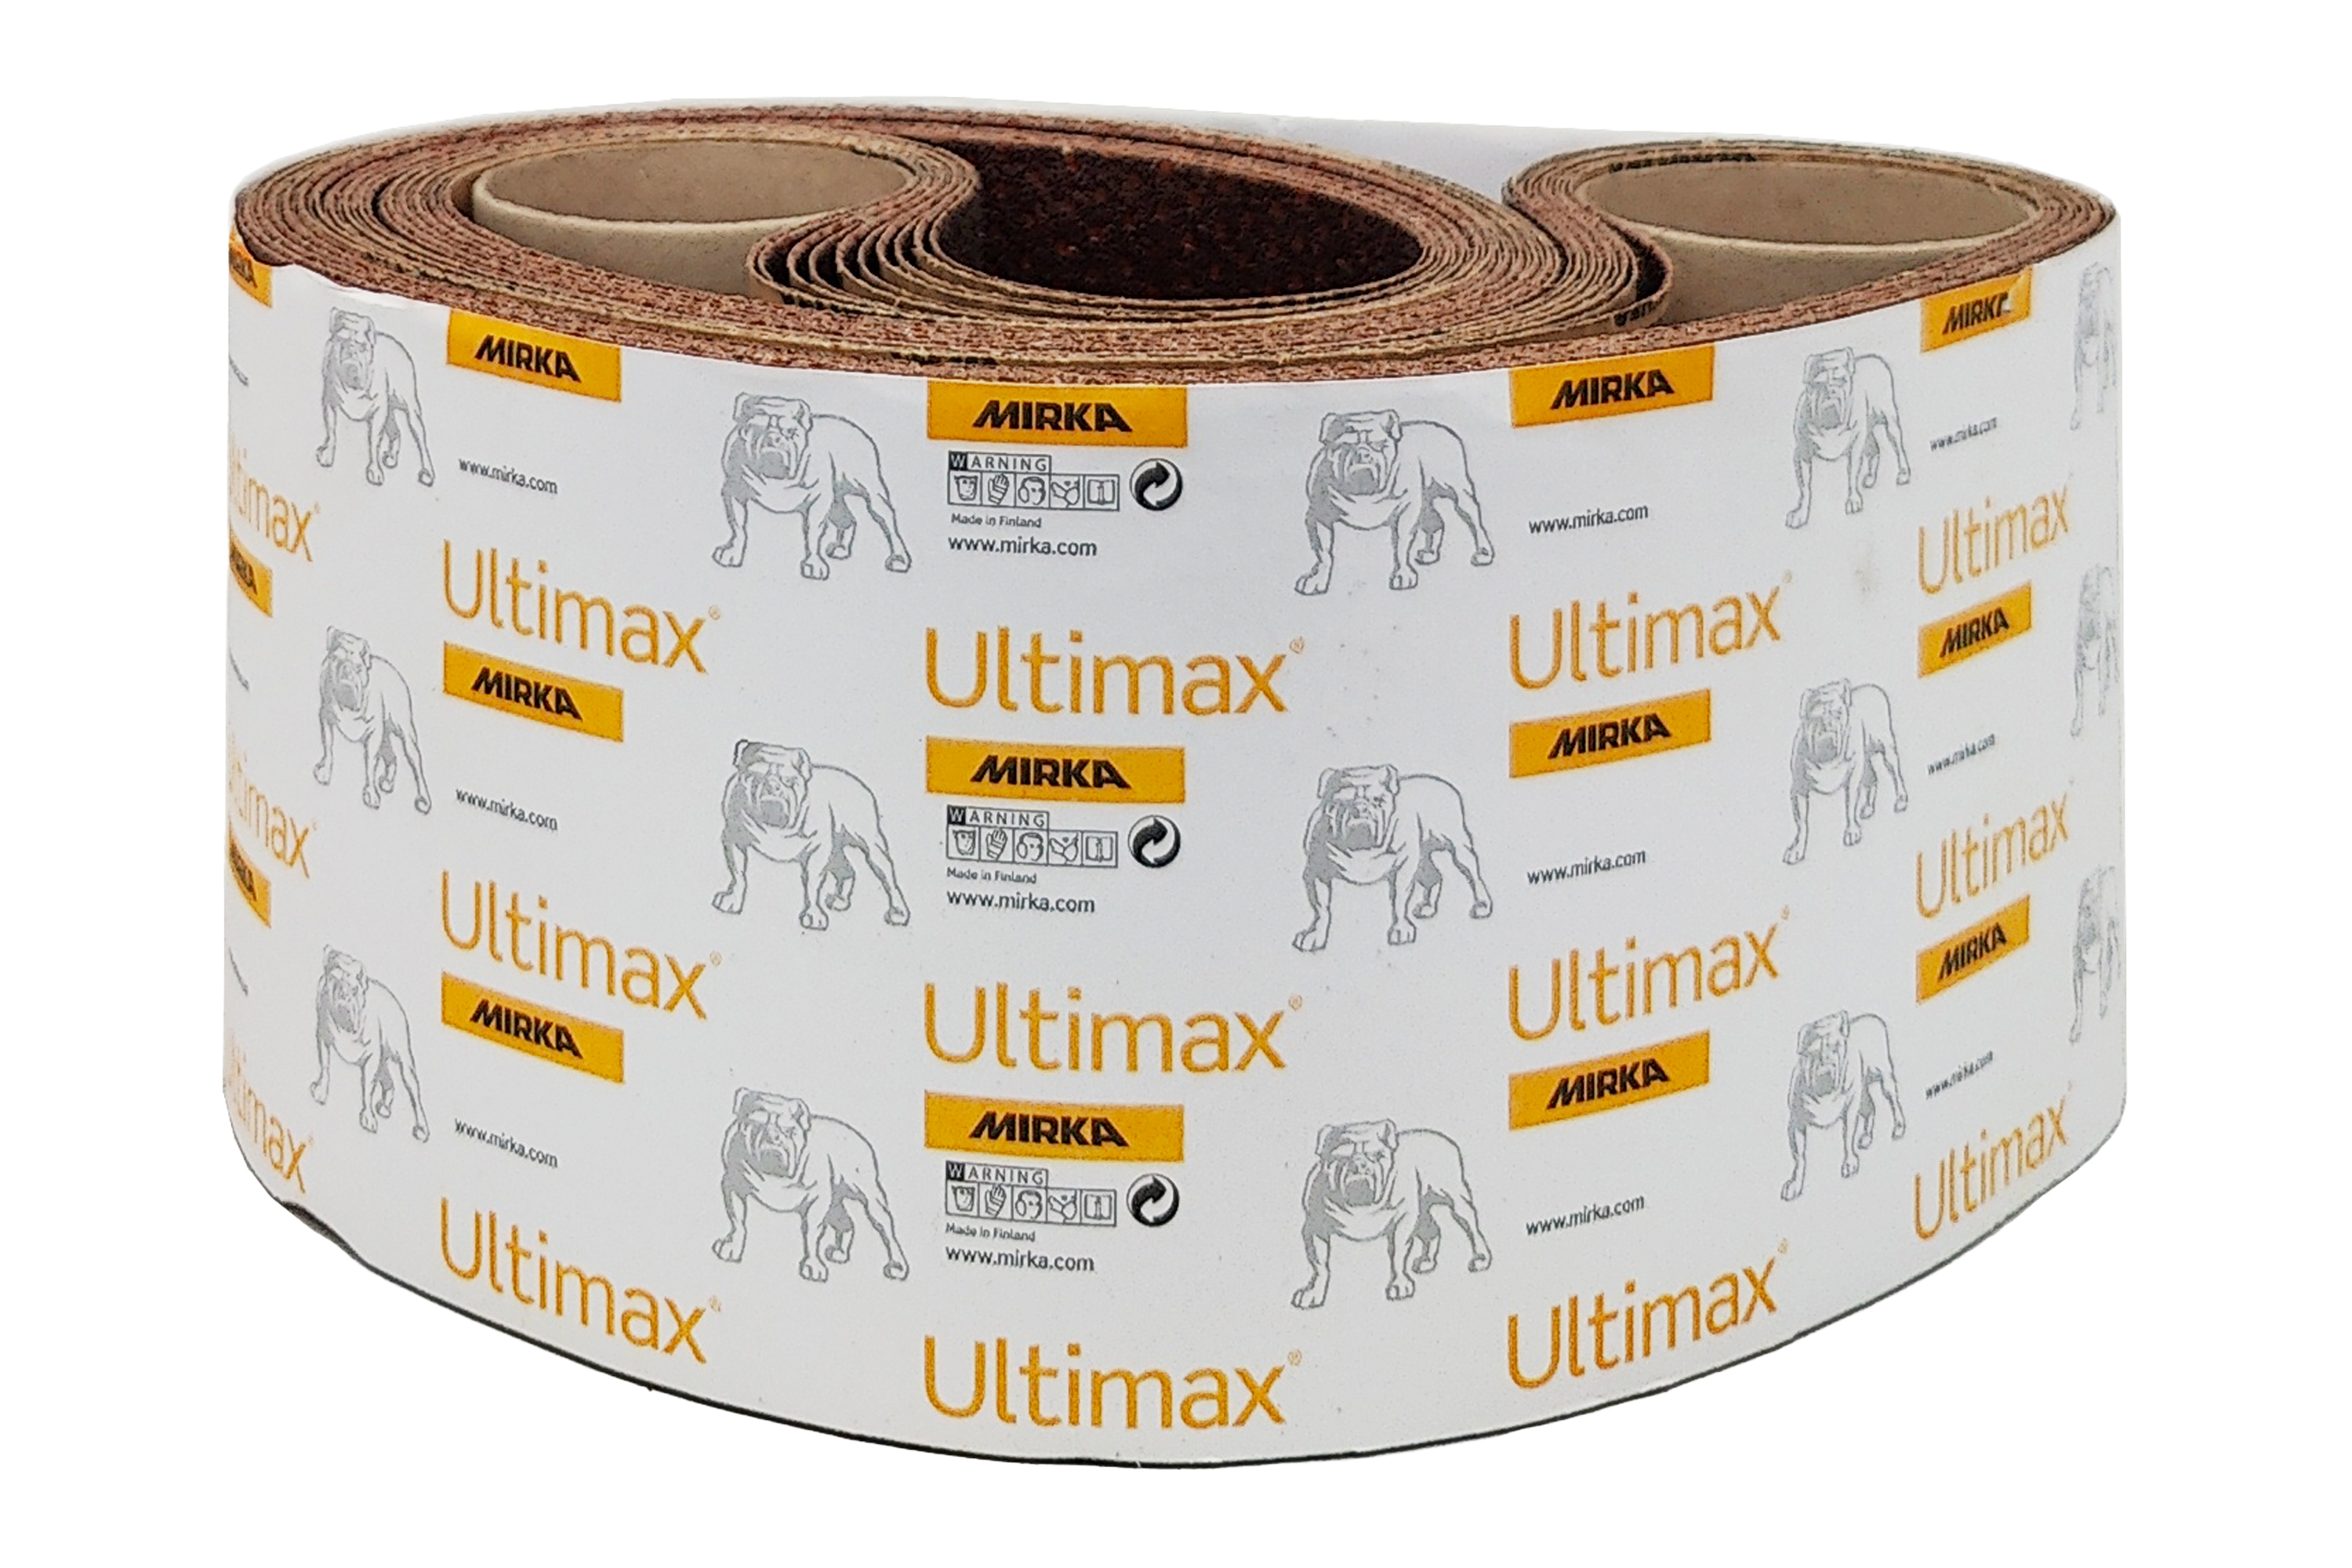 Abbildung Mirka Ultimax 150x2250mm mit Verpackung.